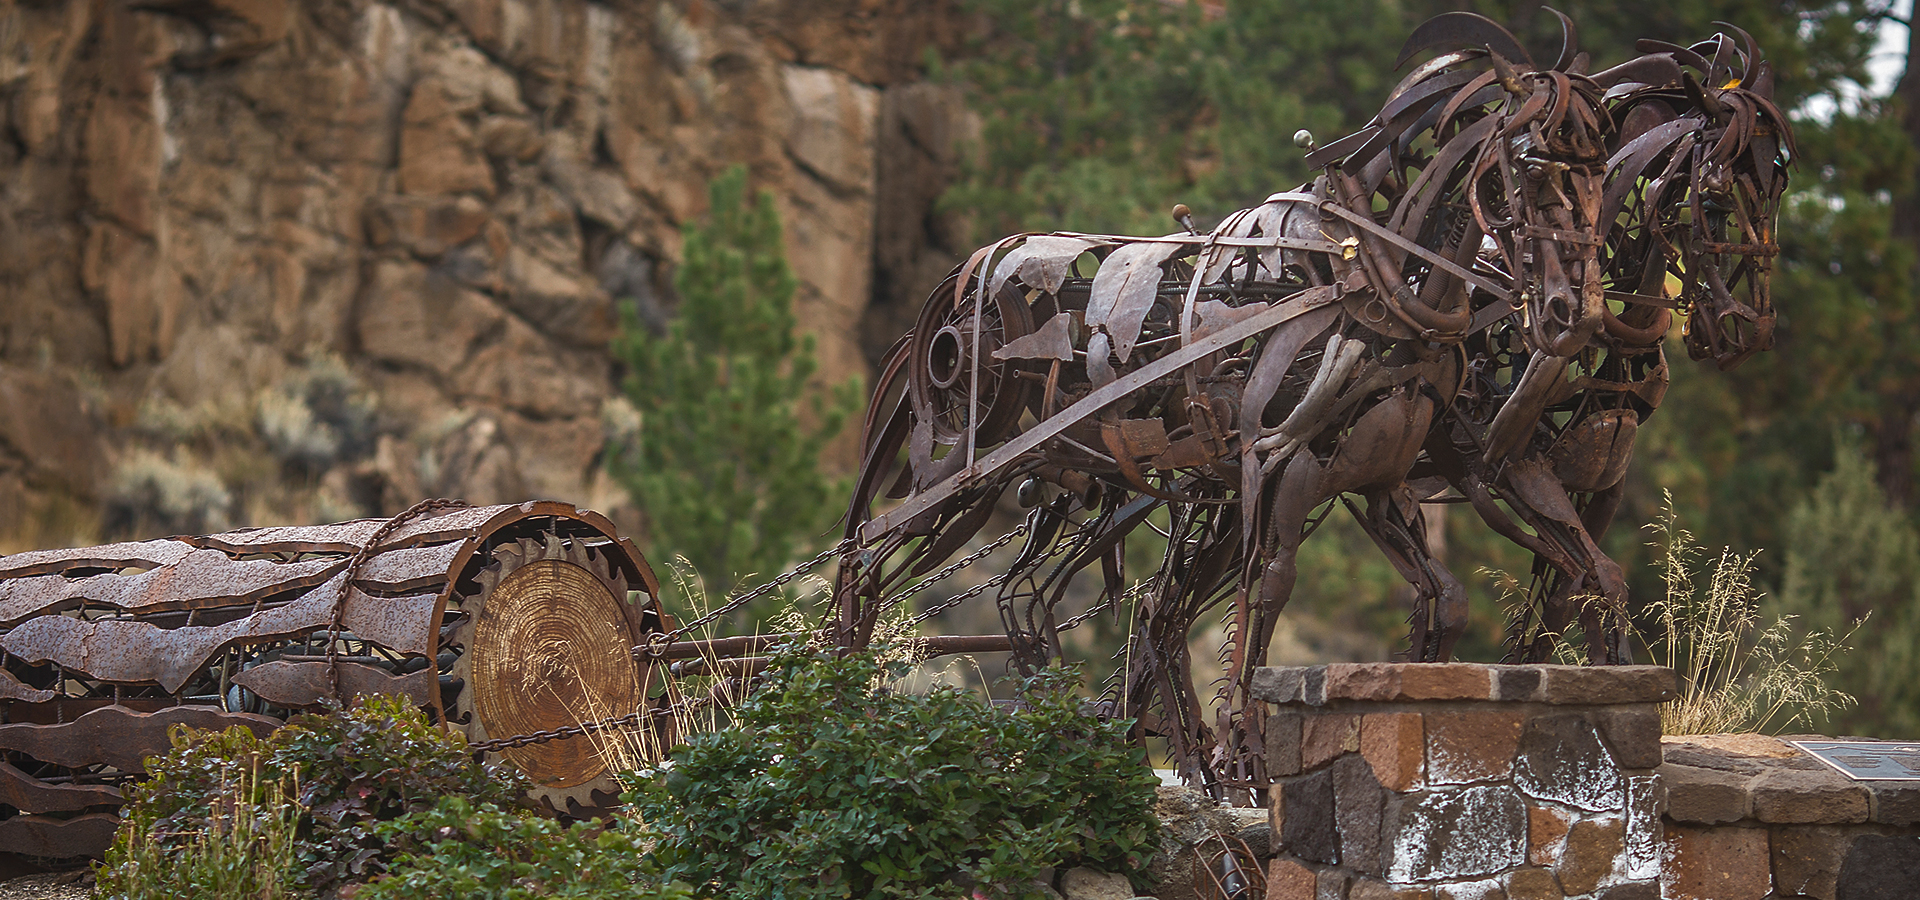 The draft horse sculpture at Farewell Bend park.